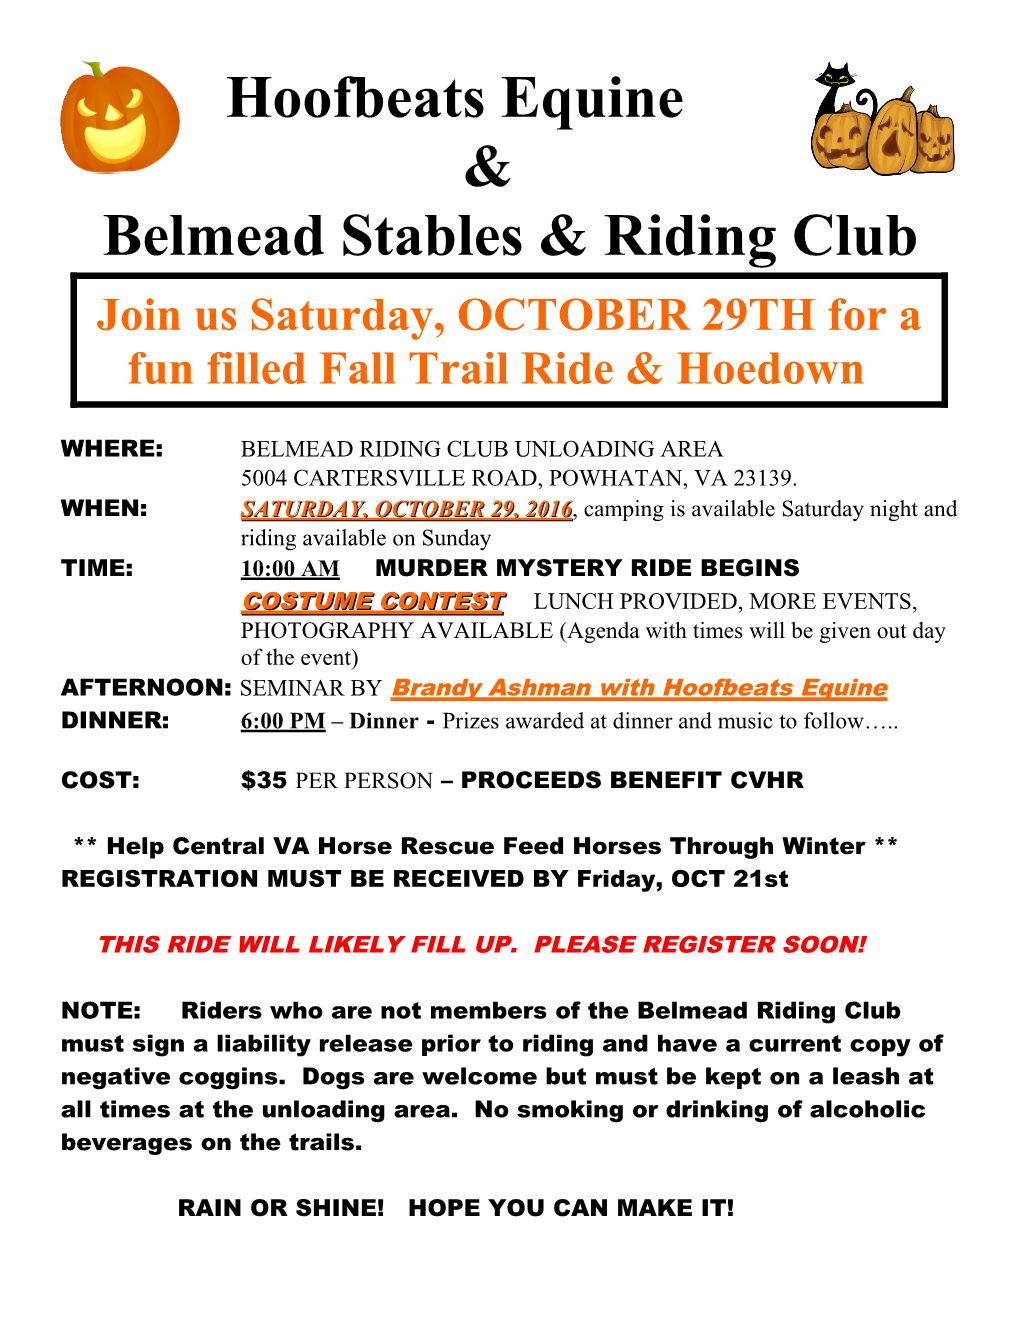 Belmead Stables & Riding Club